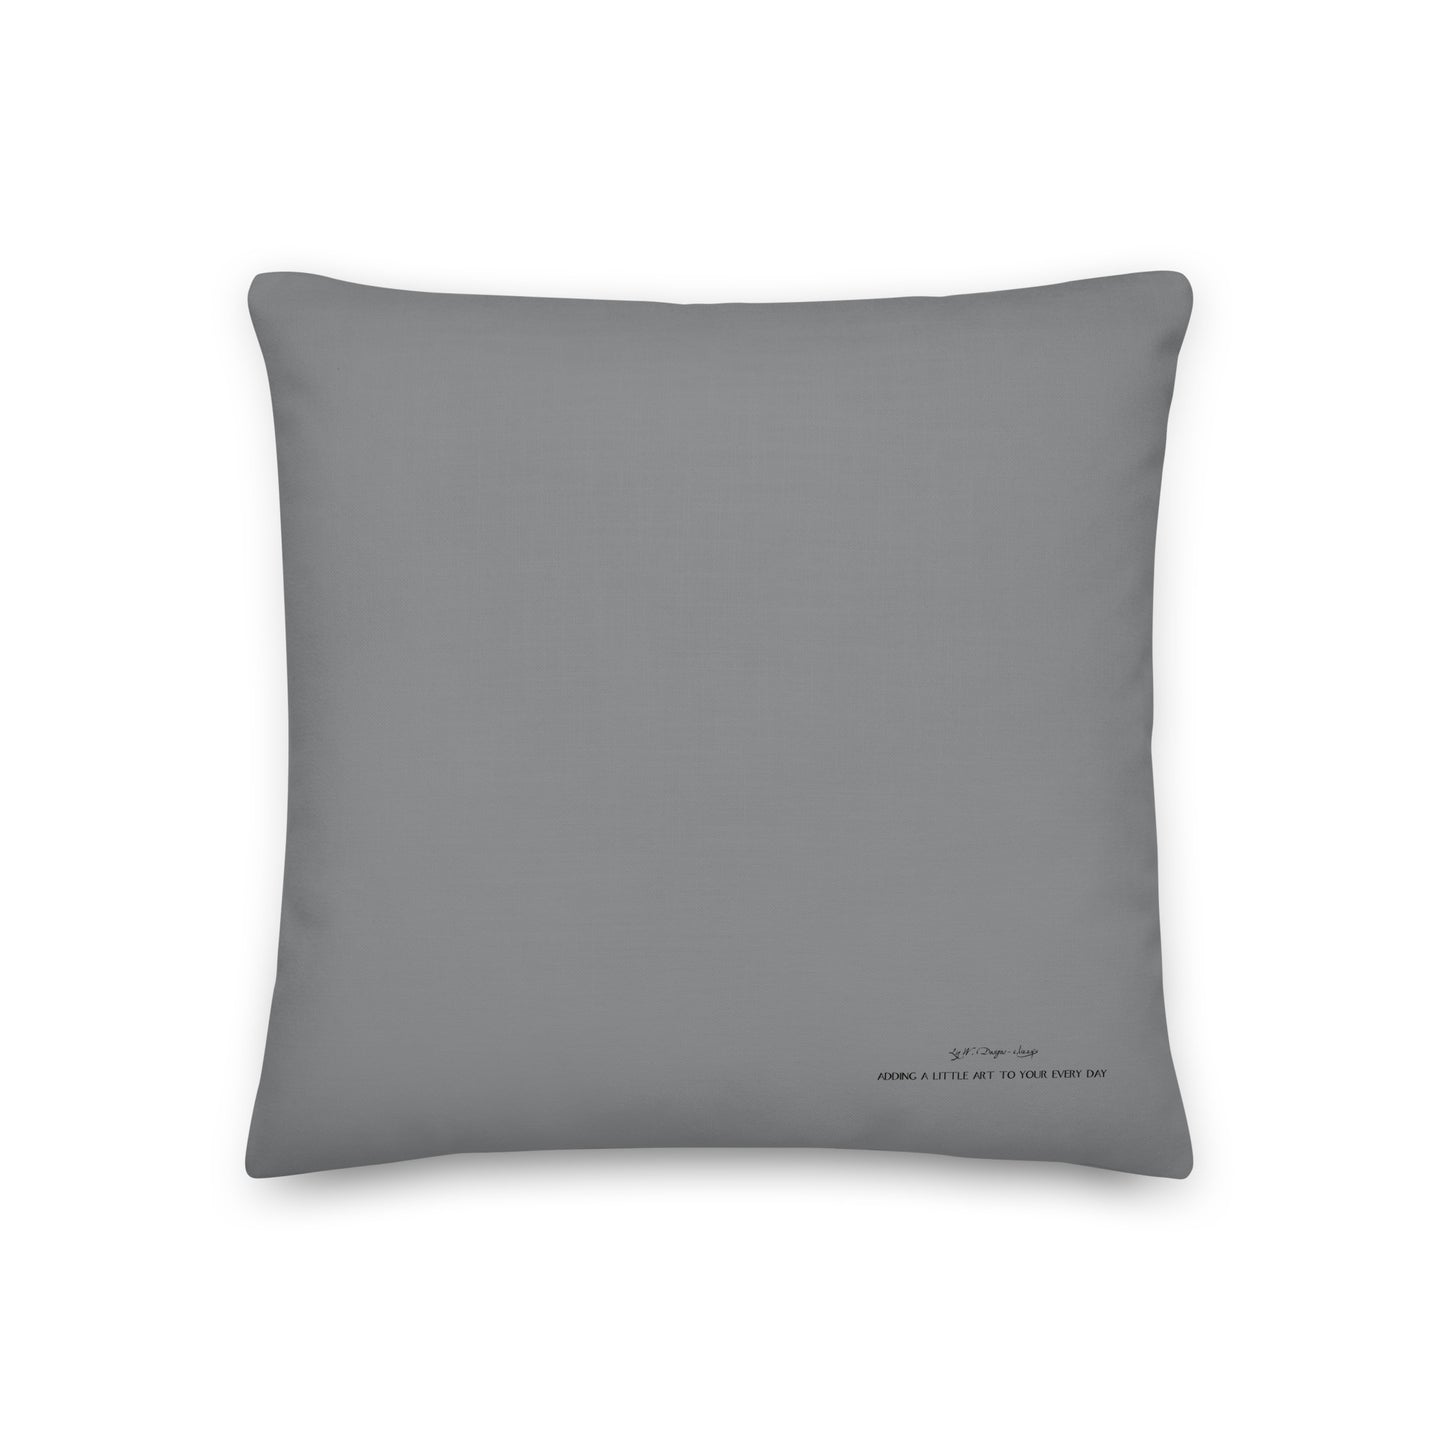 NEW! - Love All Around - Artful Pillow